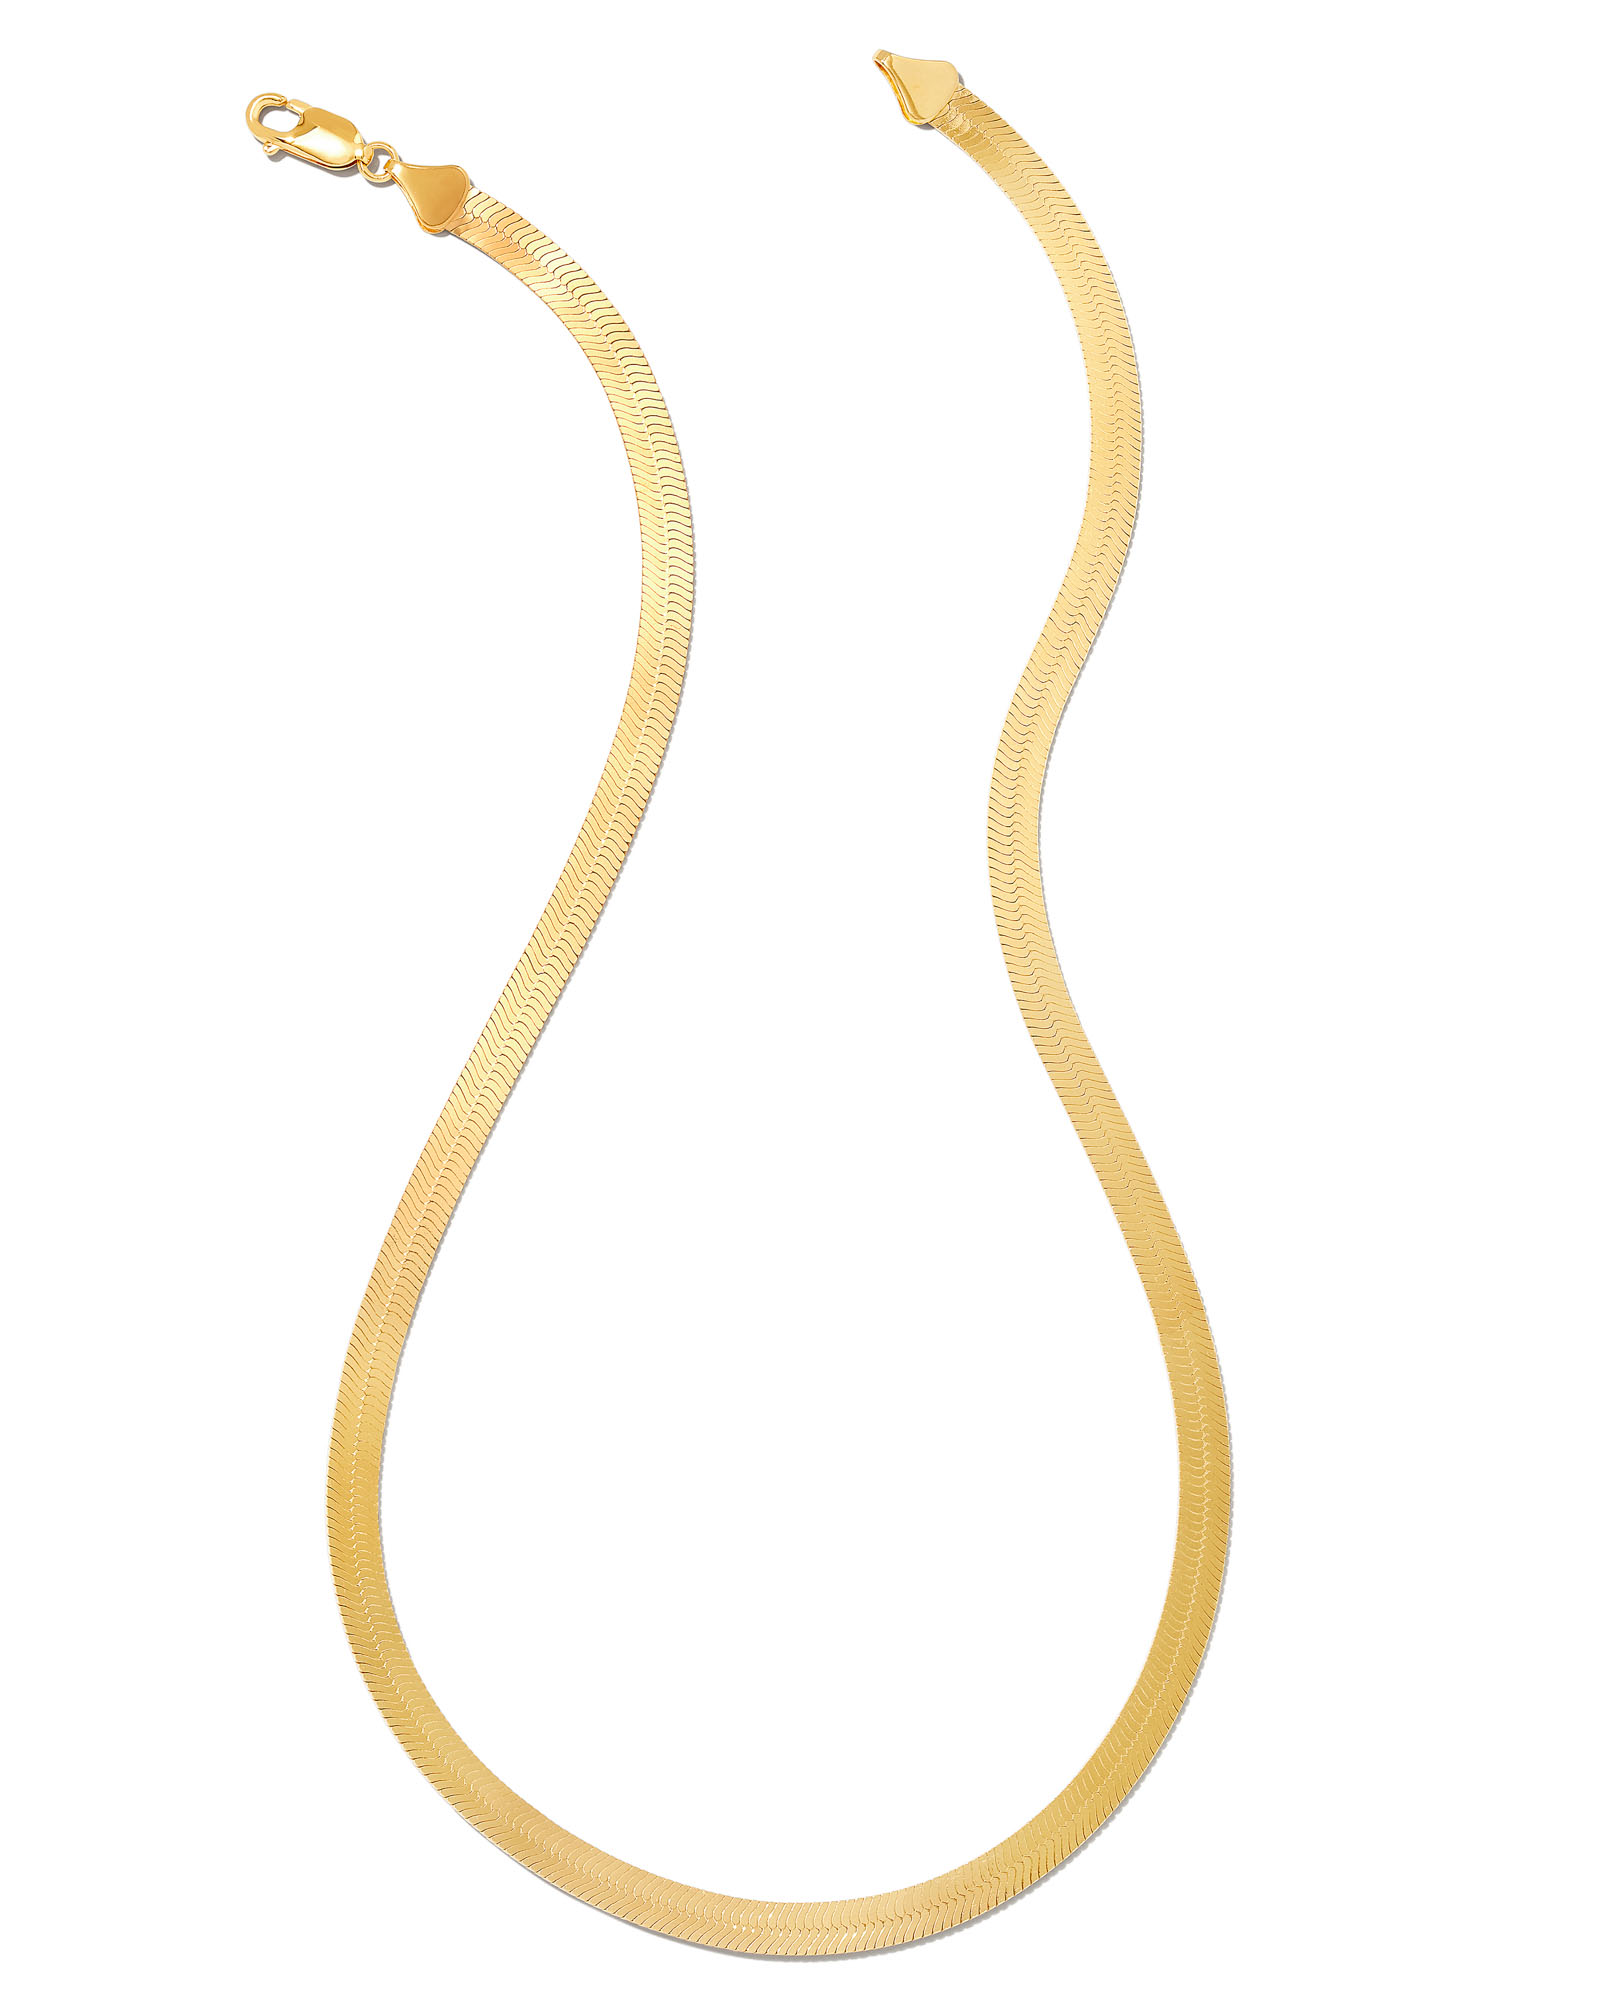 Davis Cross Charm Necklace in 18k Yellow Gold Vermeil | Kendra Scott